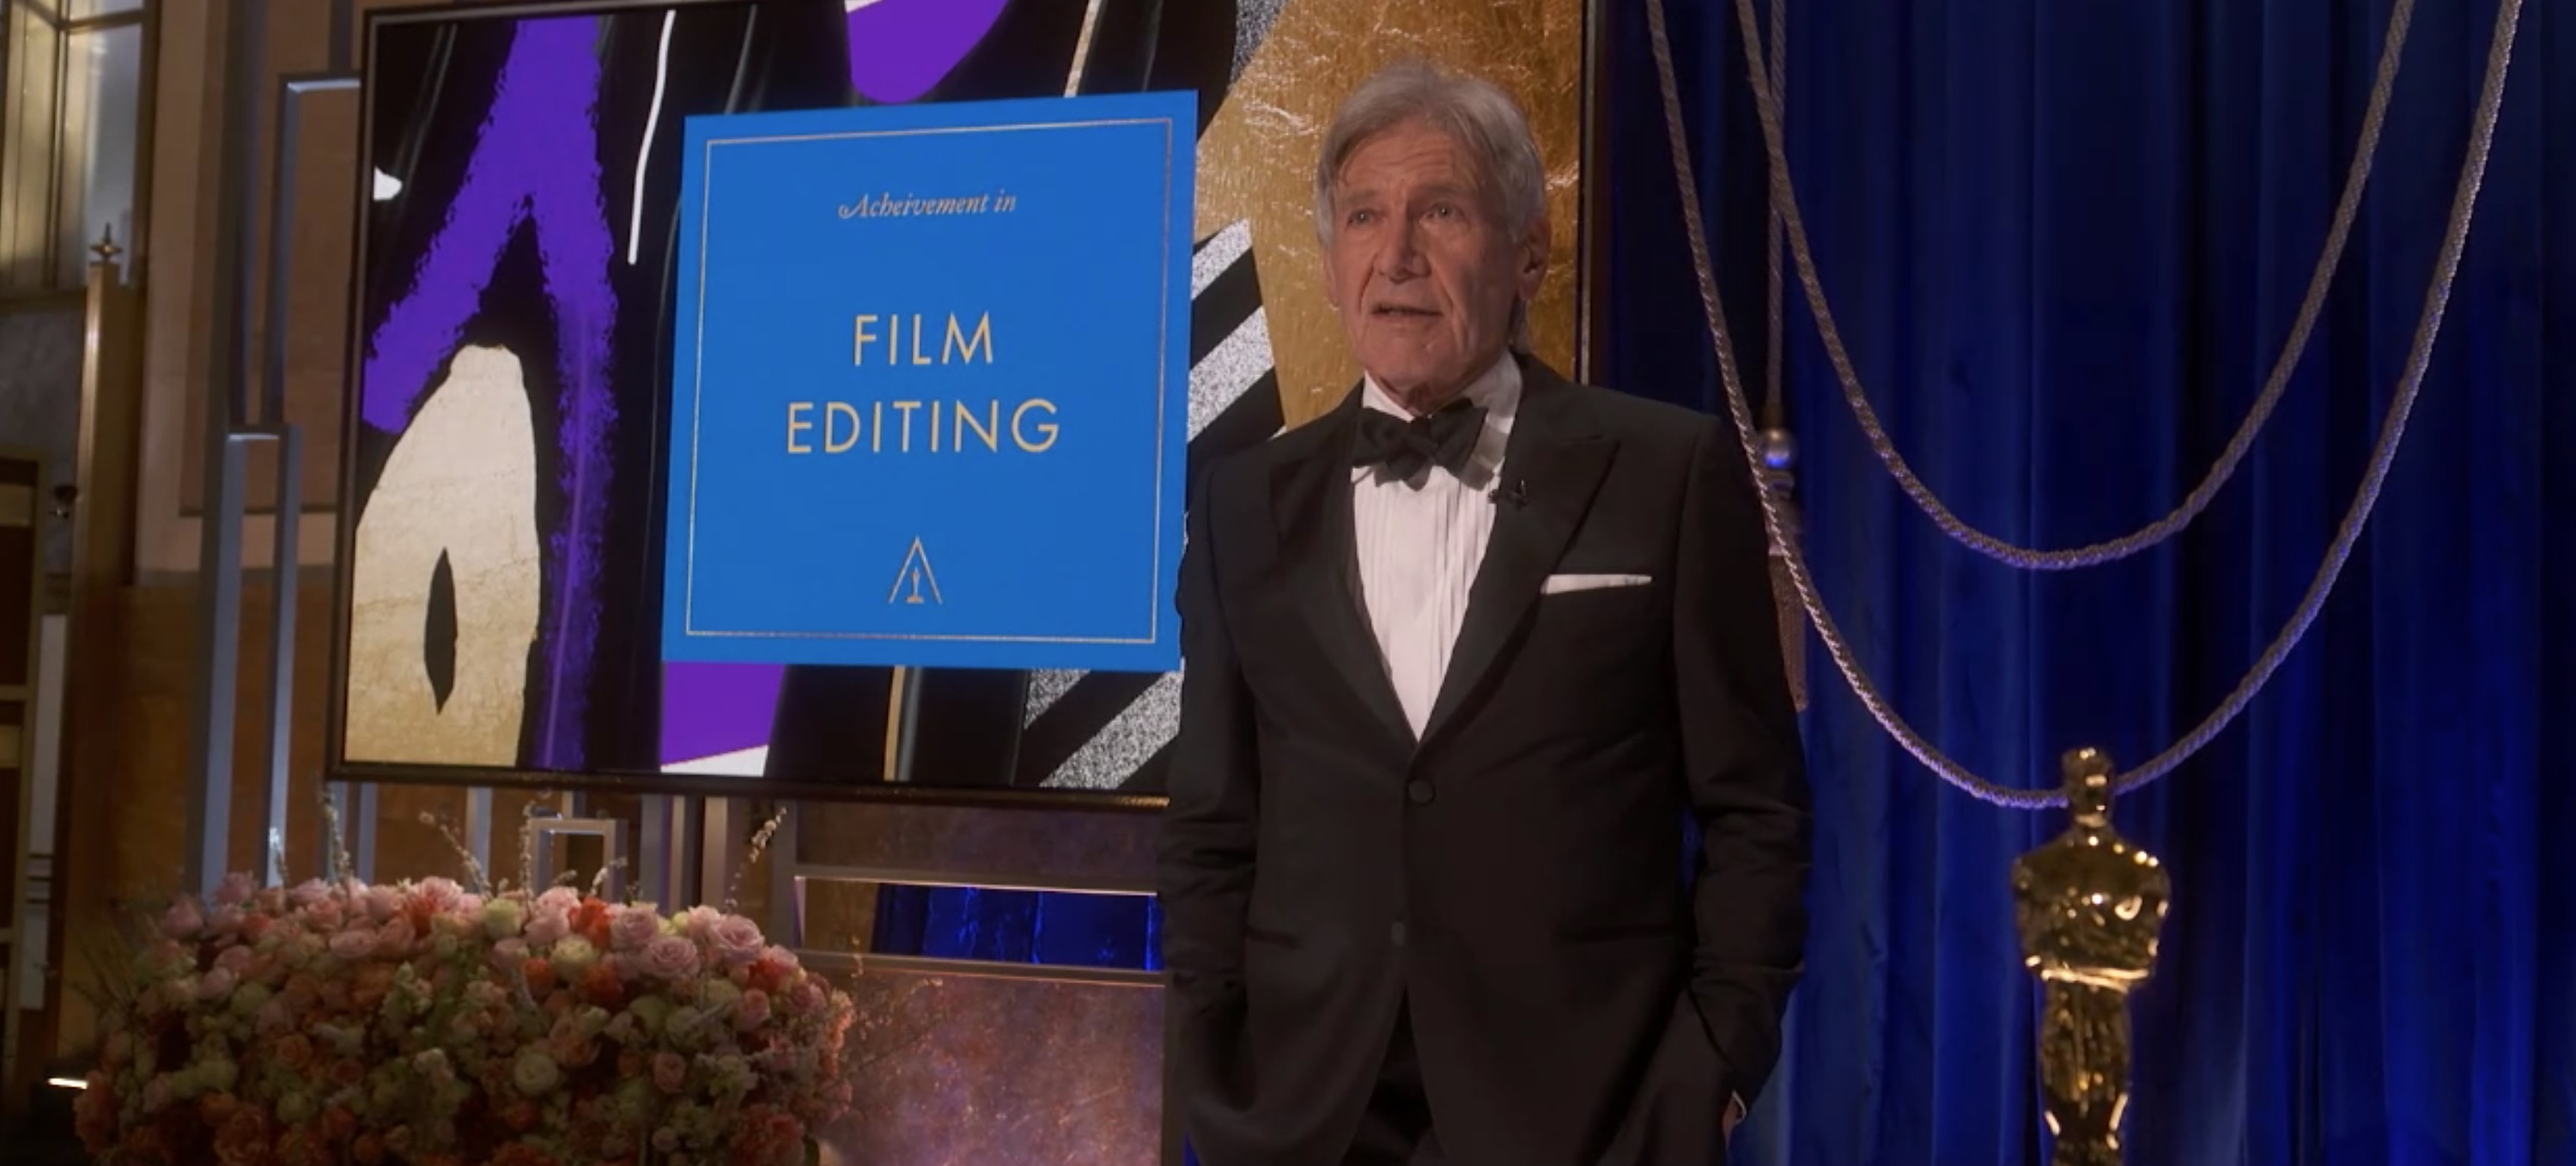 Harrison Ford díjat ad át (ABC/AMPAS via Getty Images)HARRISON FORD